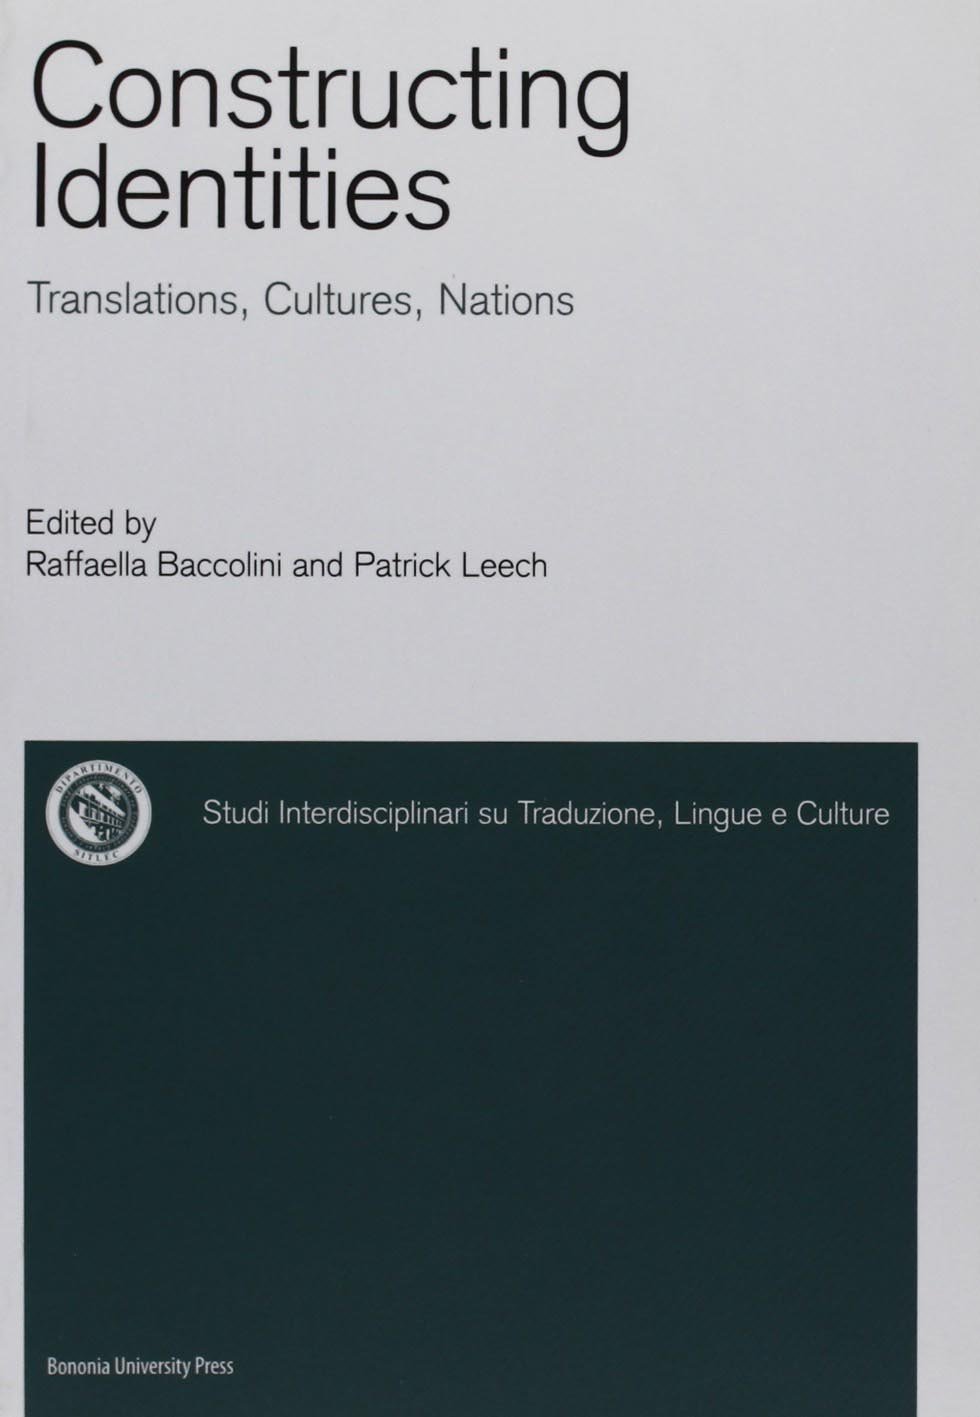 Constructing identities - Bologna University Press